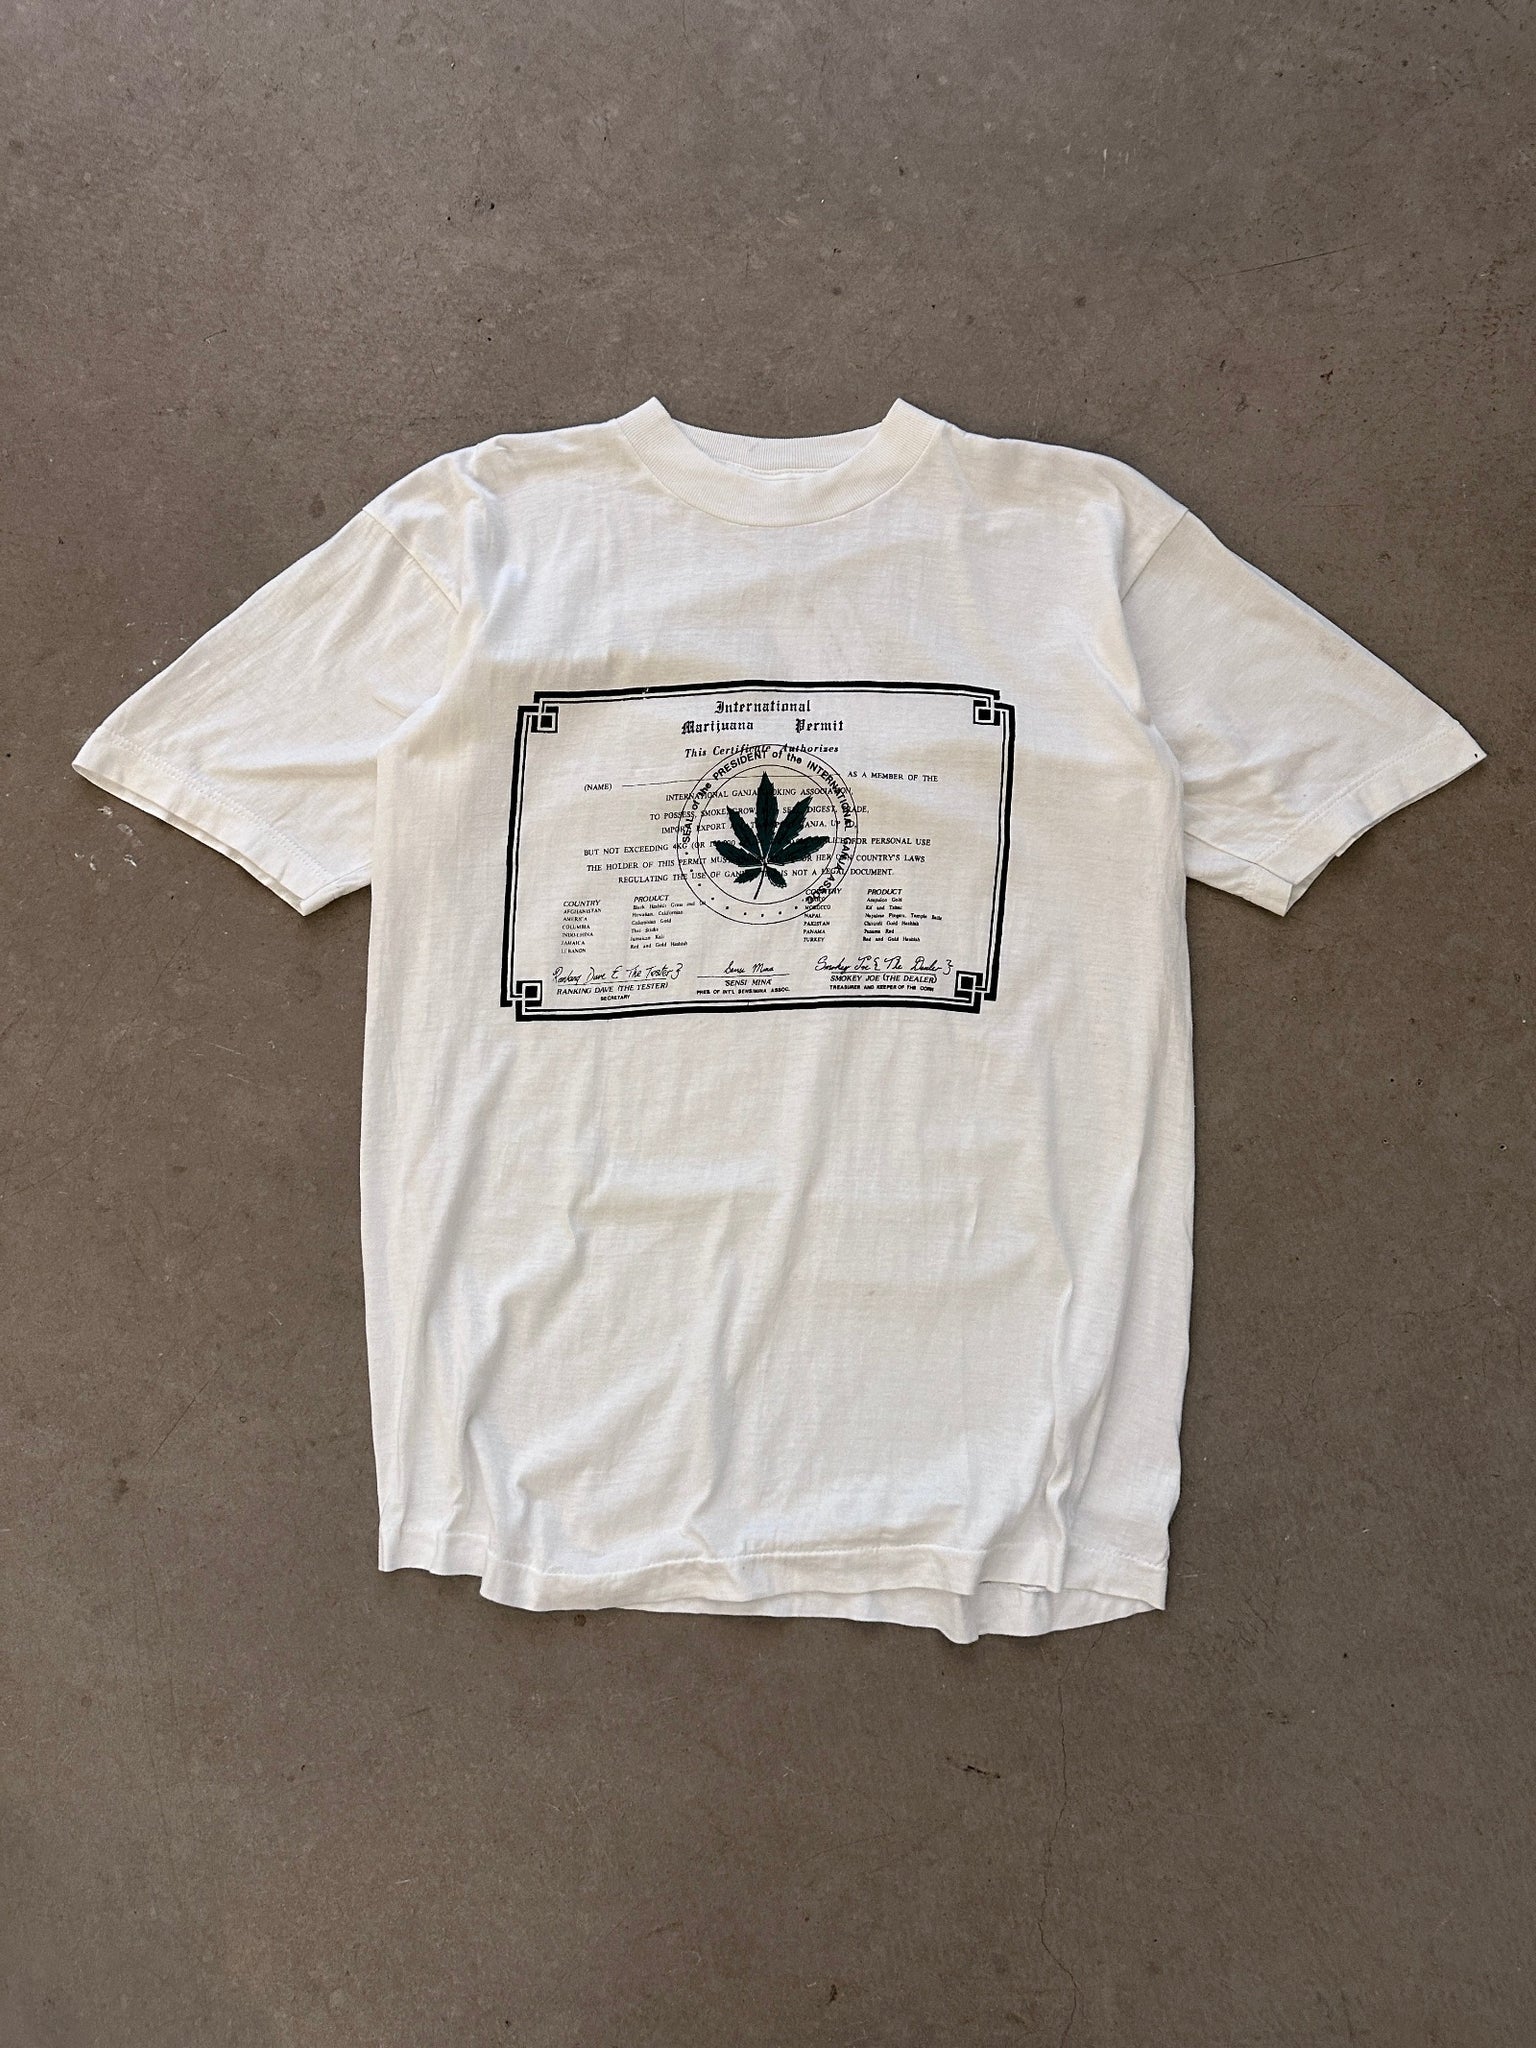 1980's International Marijuana Permit T-Shirt - M